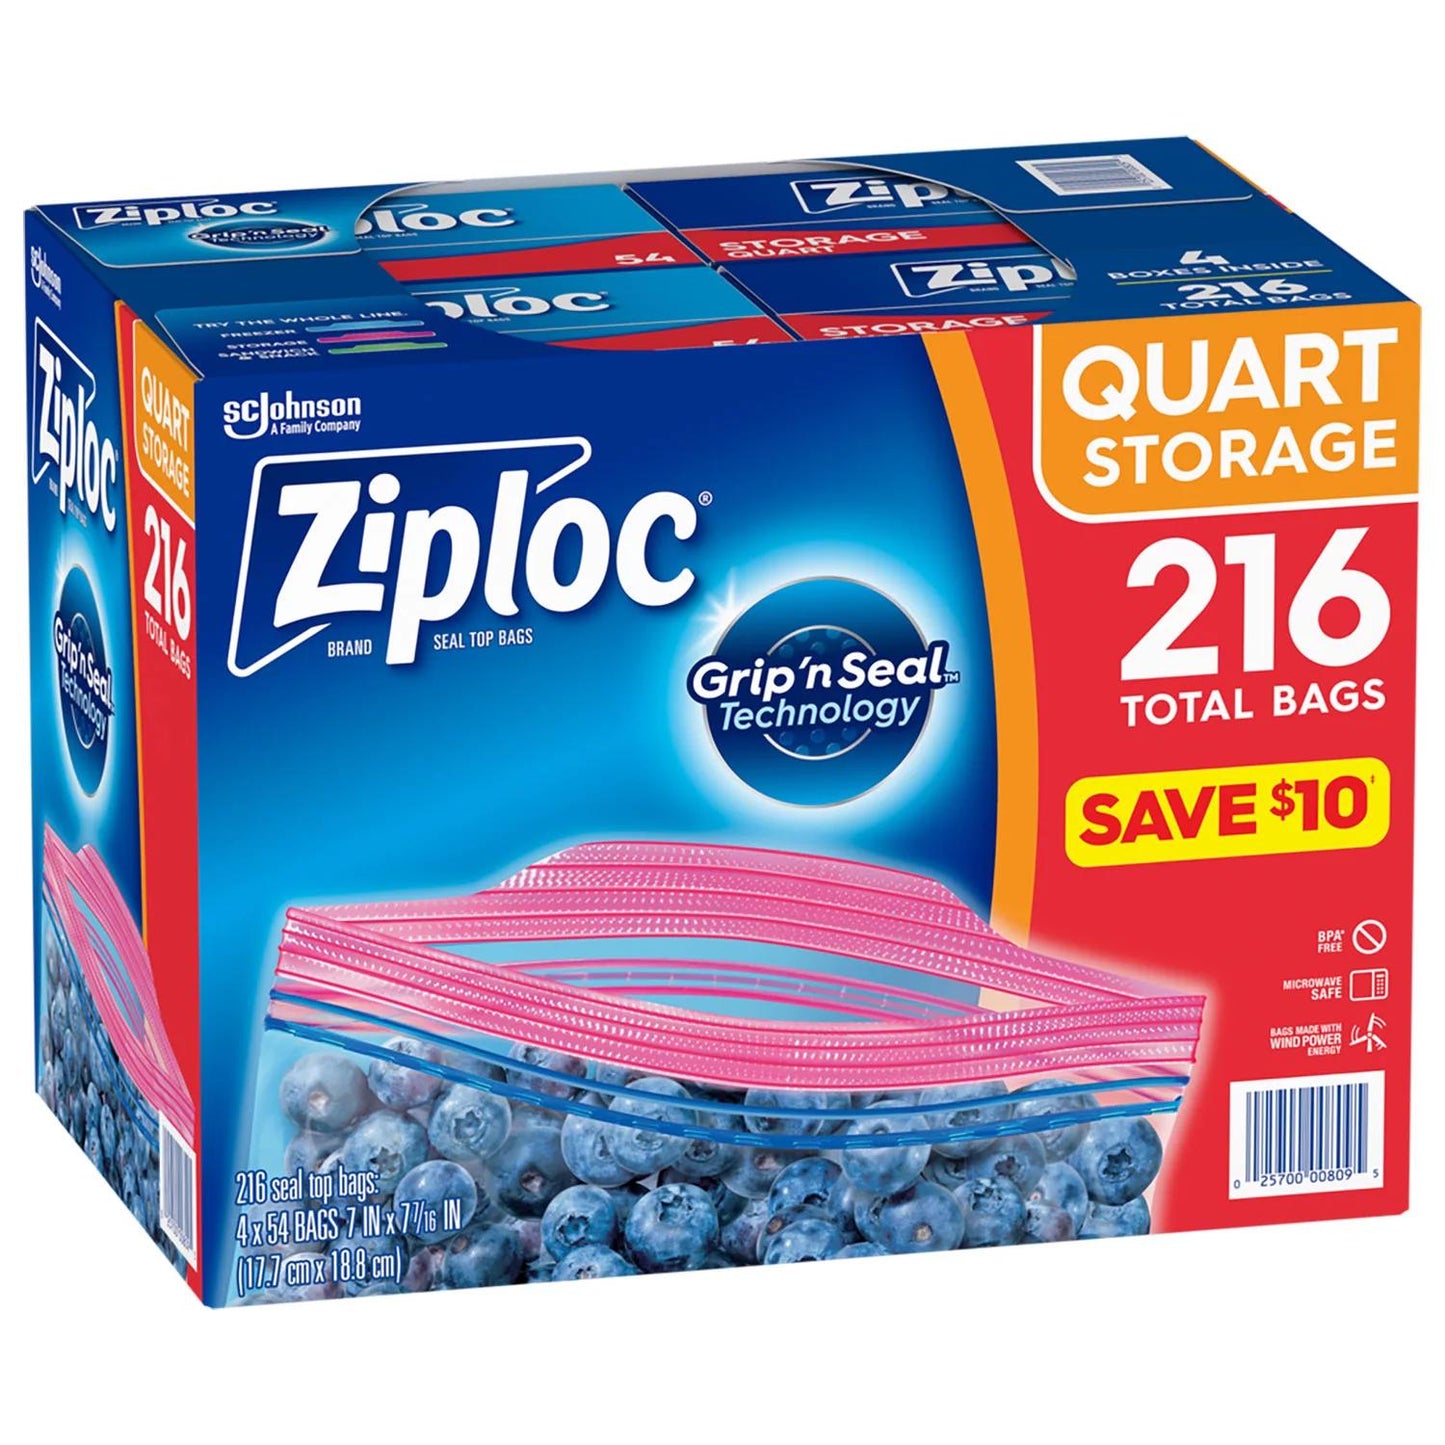 Ziploc Storage Quart Bags with New Stay Open Design (216 ct.)